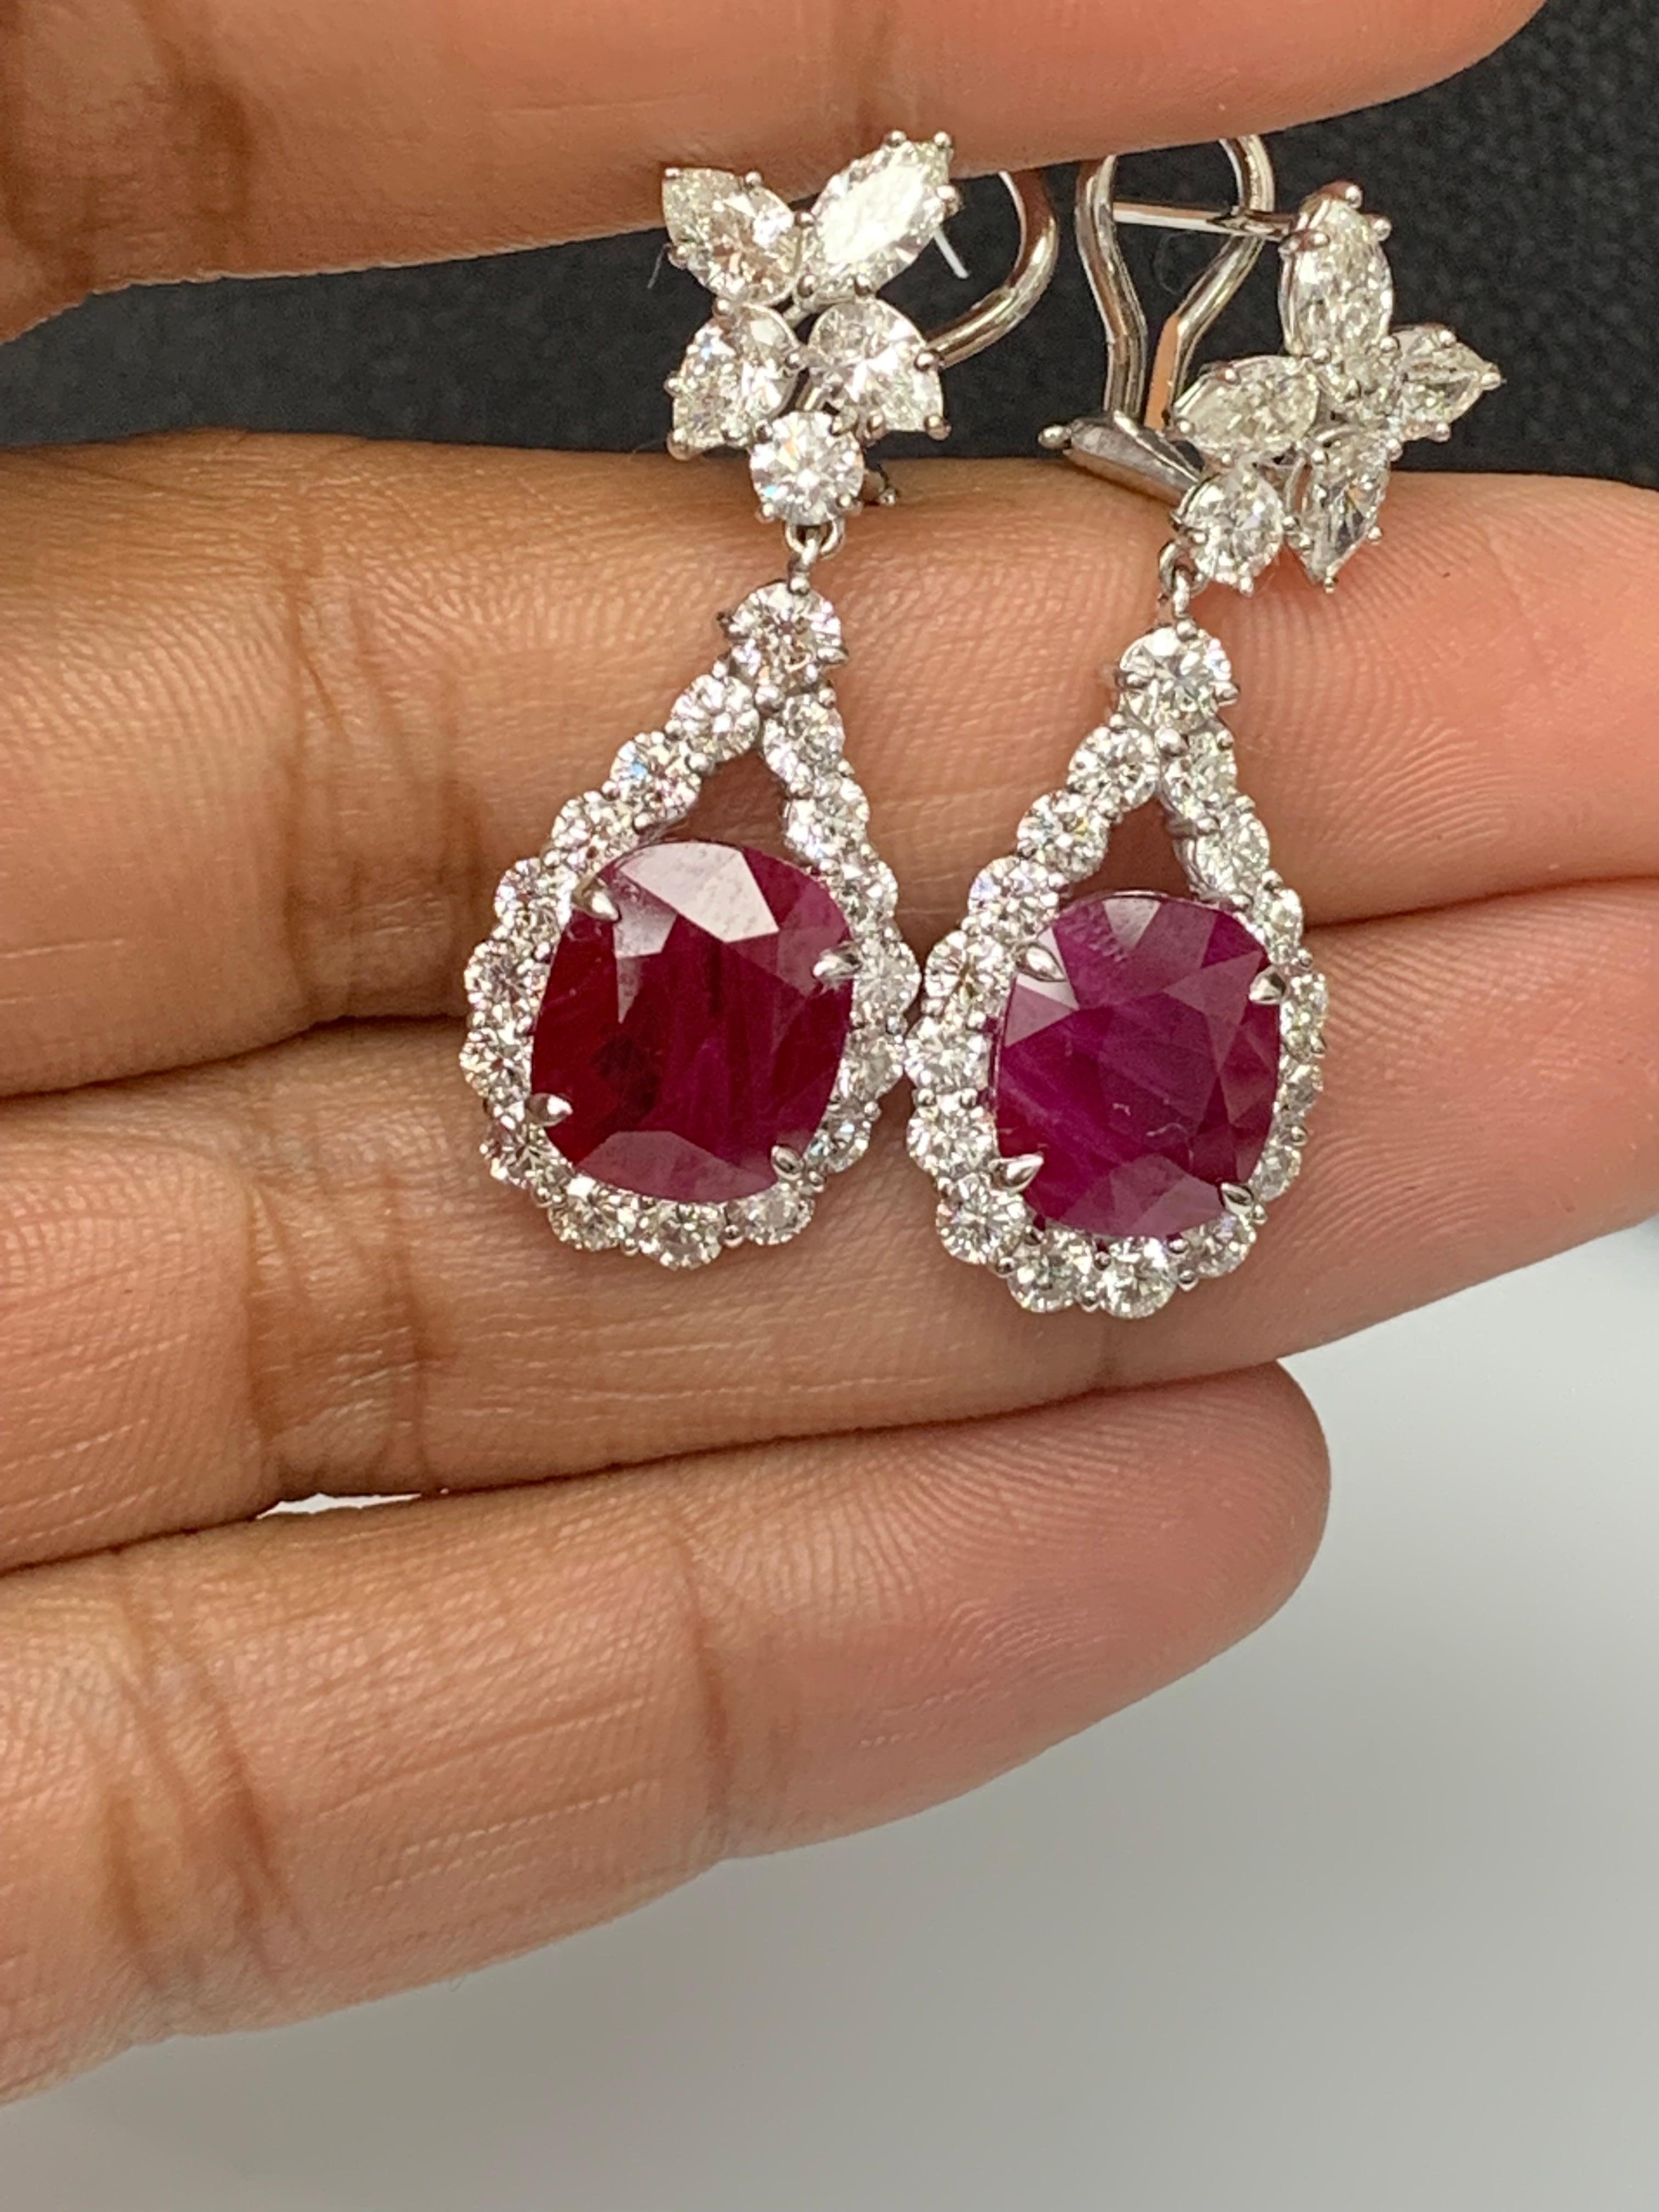 Certified 10.18 Carat Burma Ruby and Diamond Drop Earrings in 18K White Gold For Sale 5